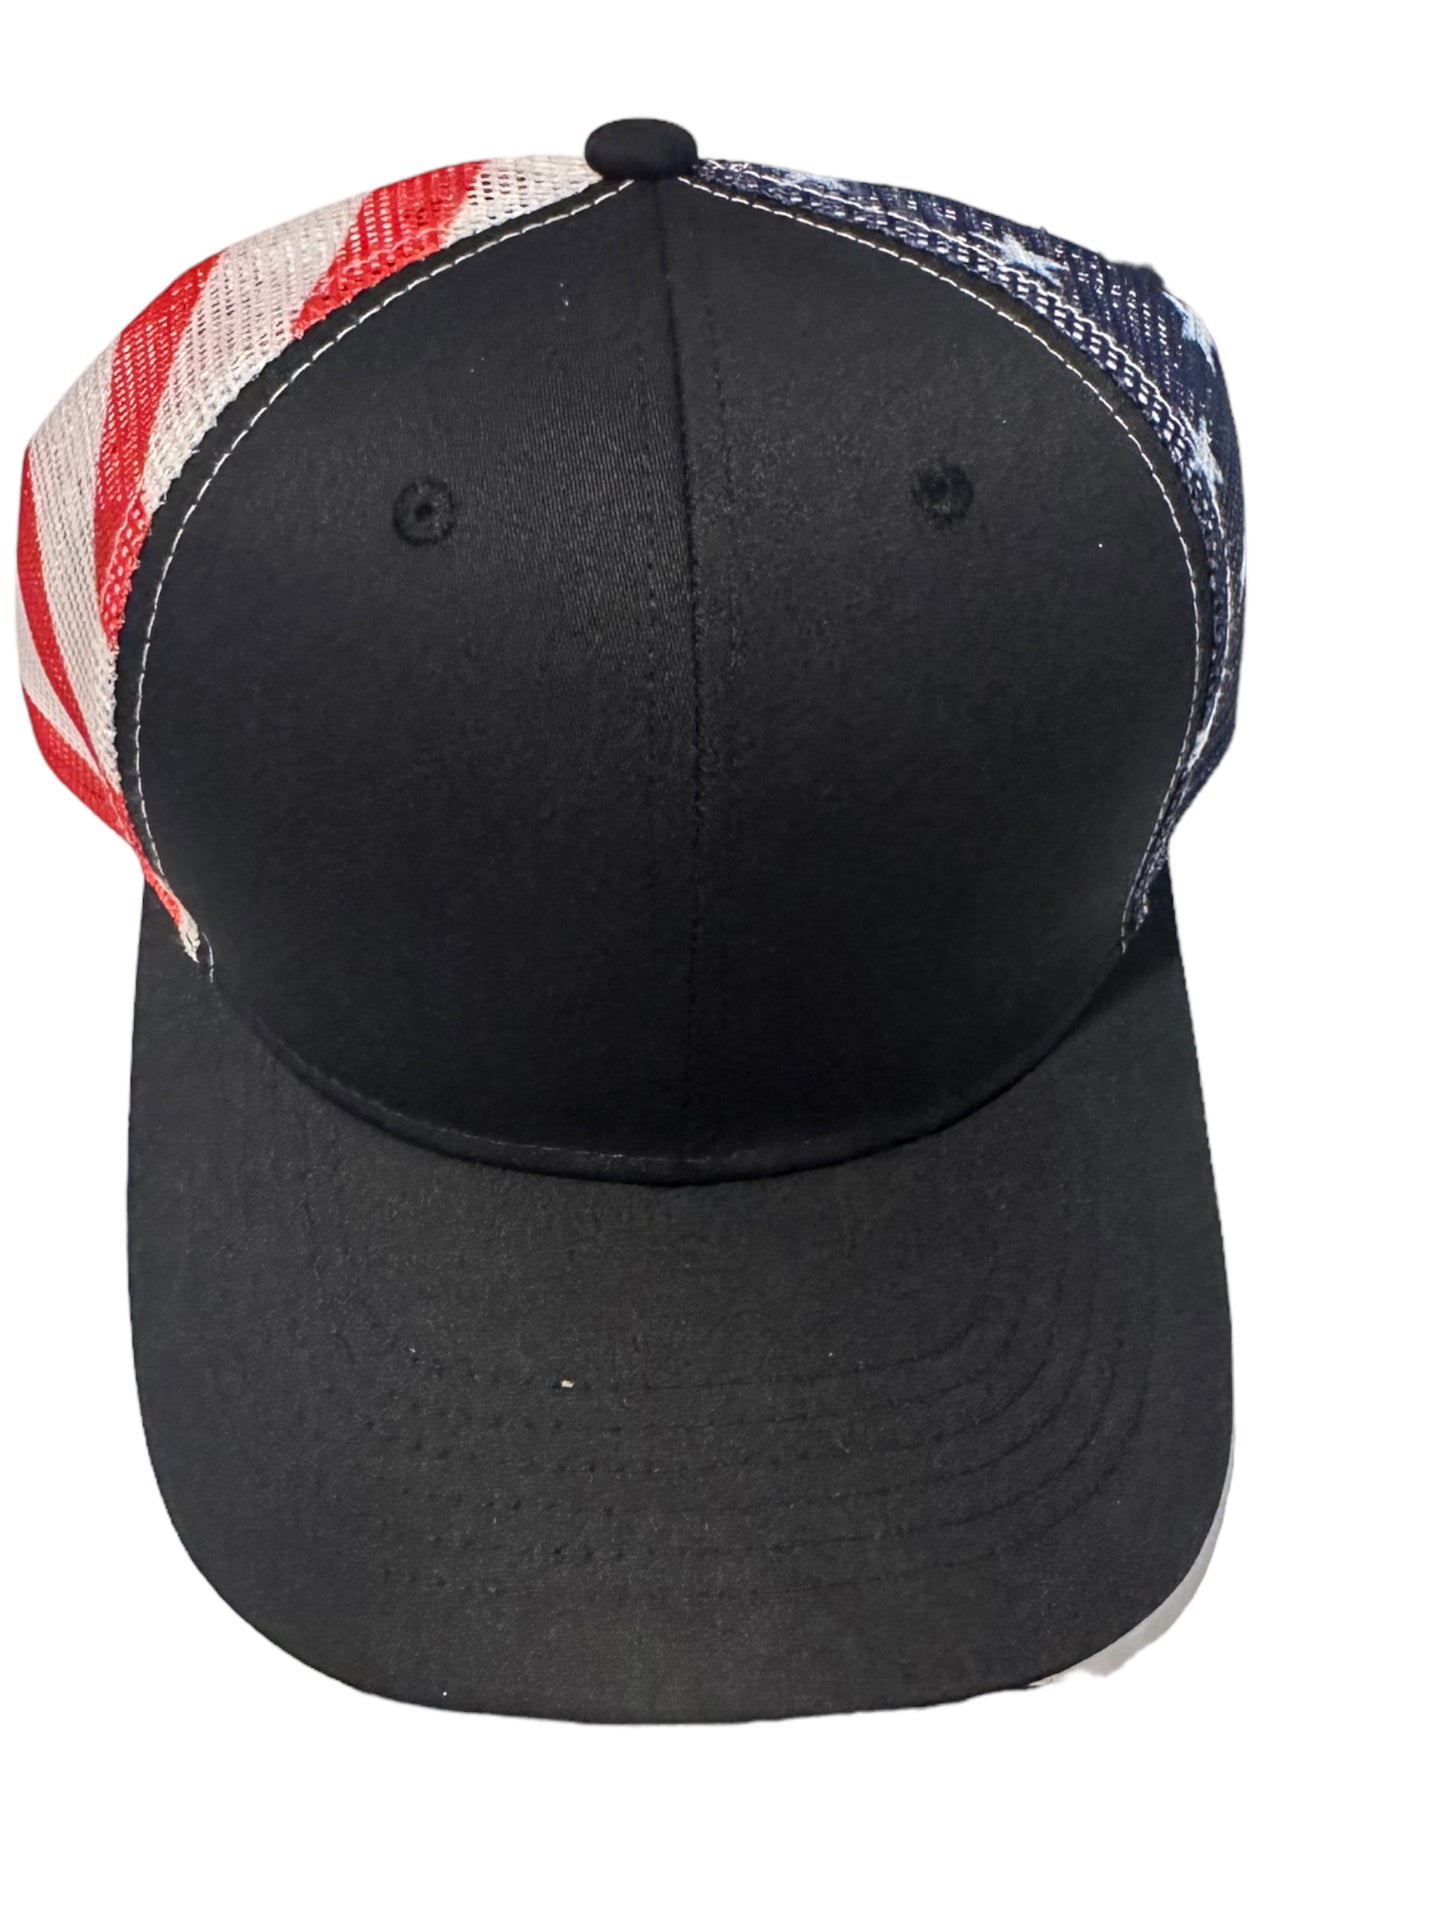 American flag mesh black curved trucker SnapBack